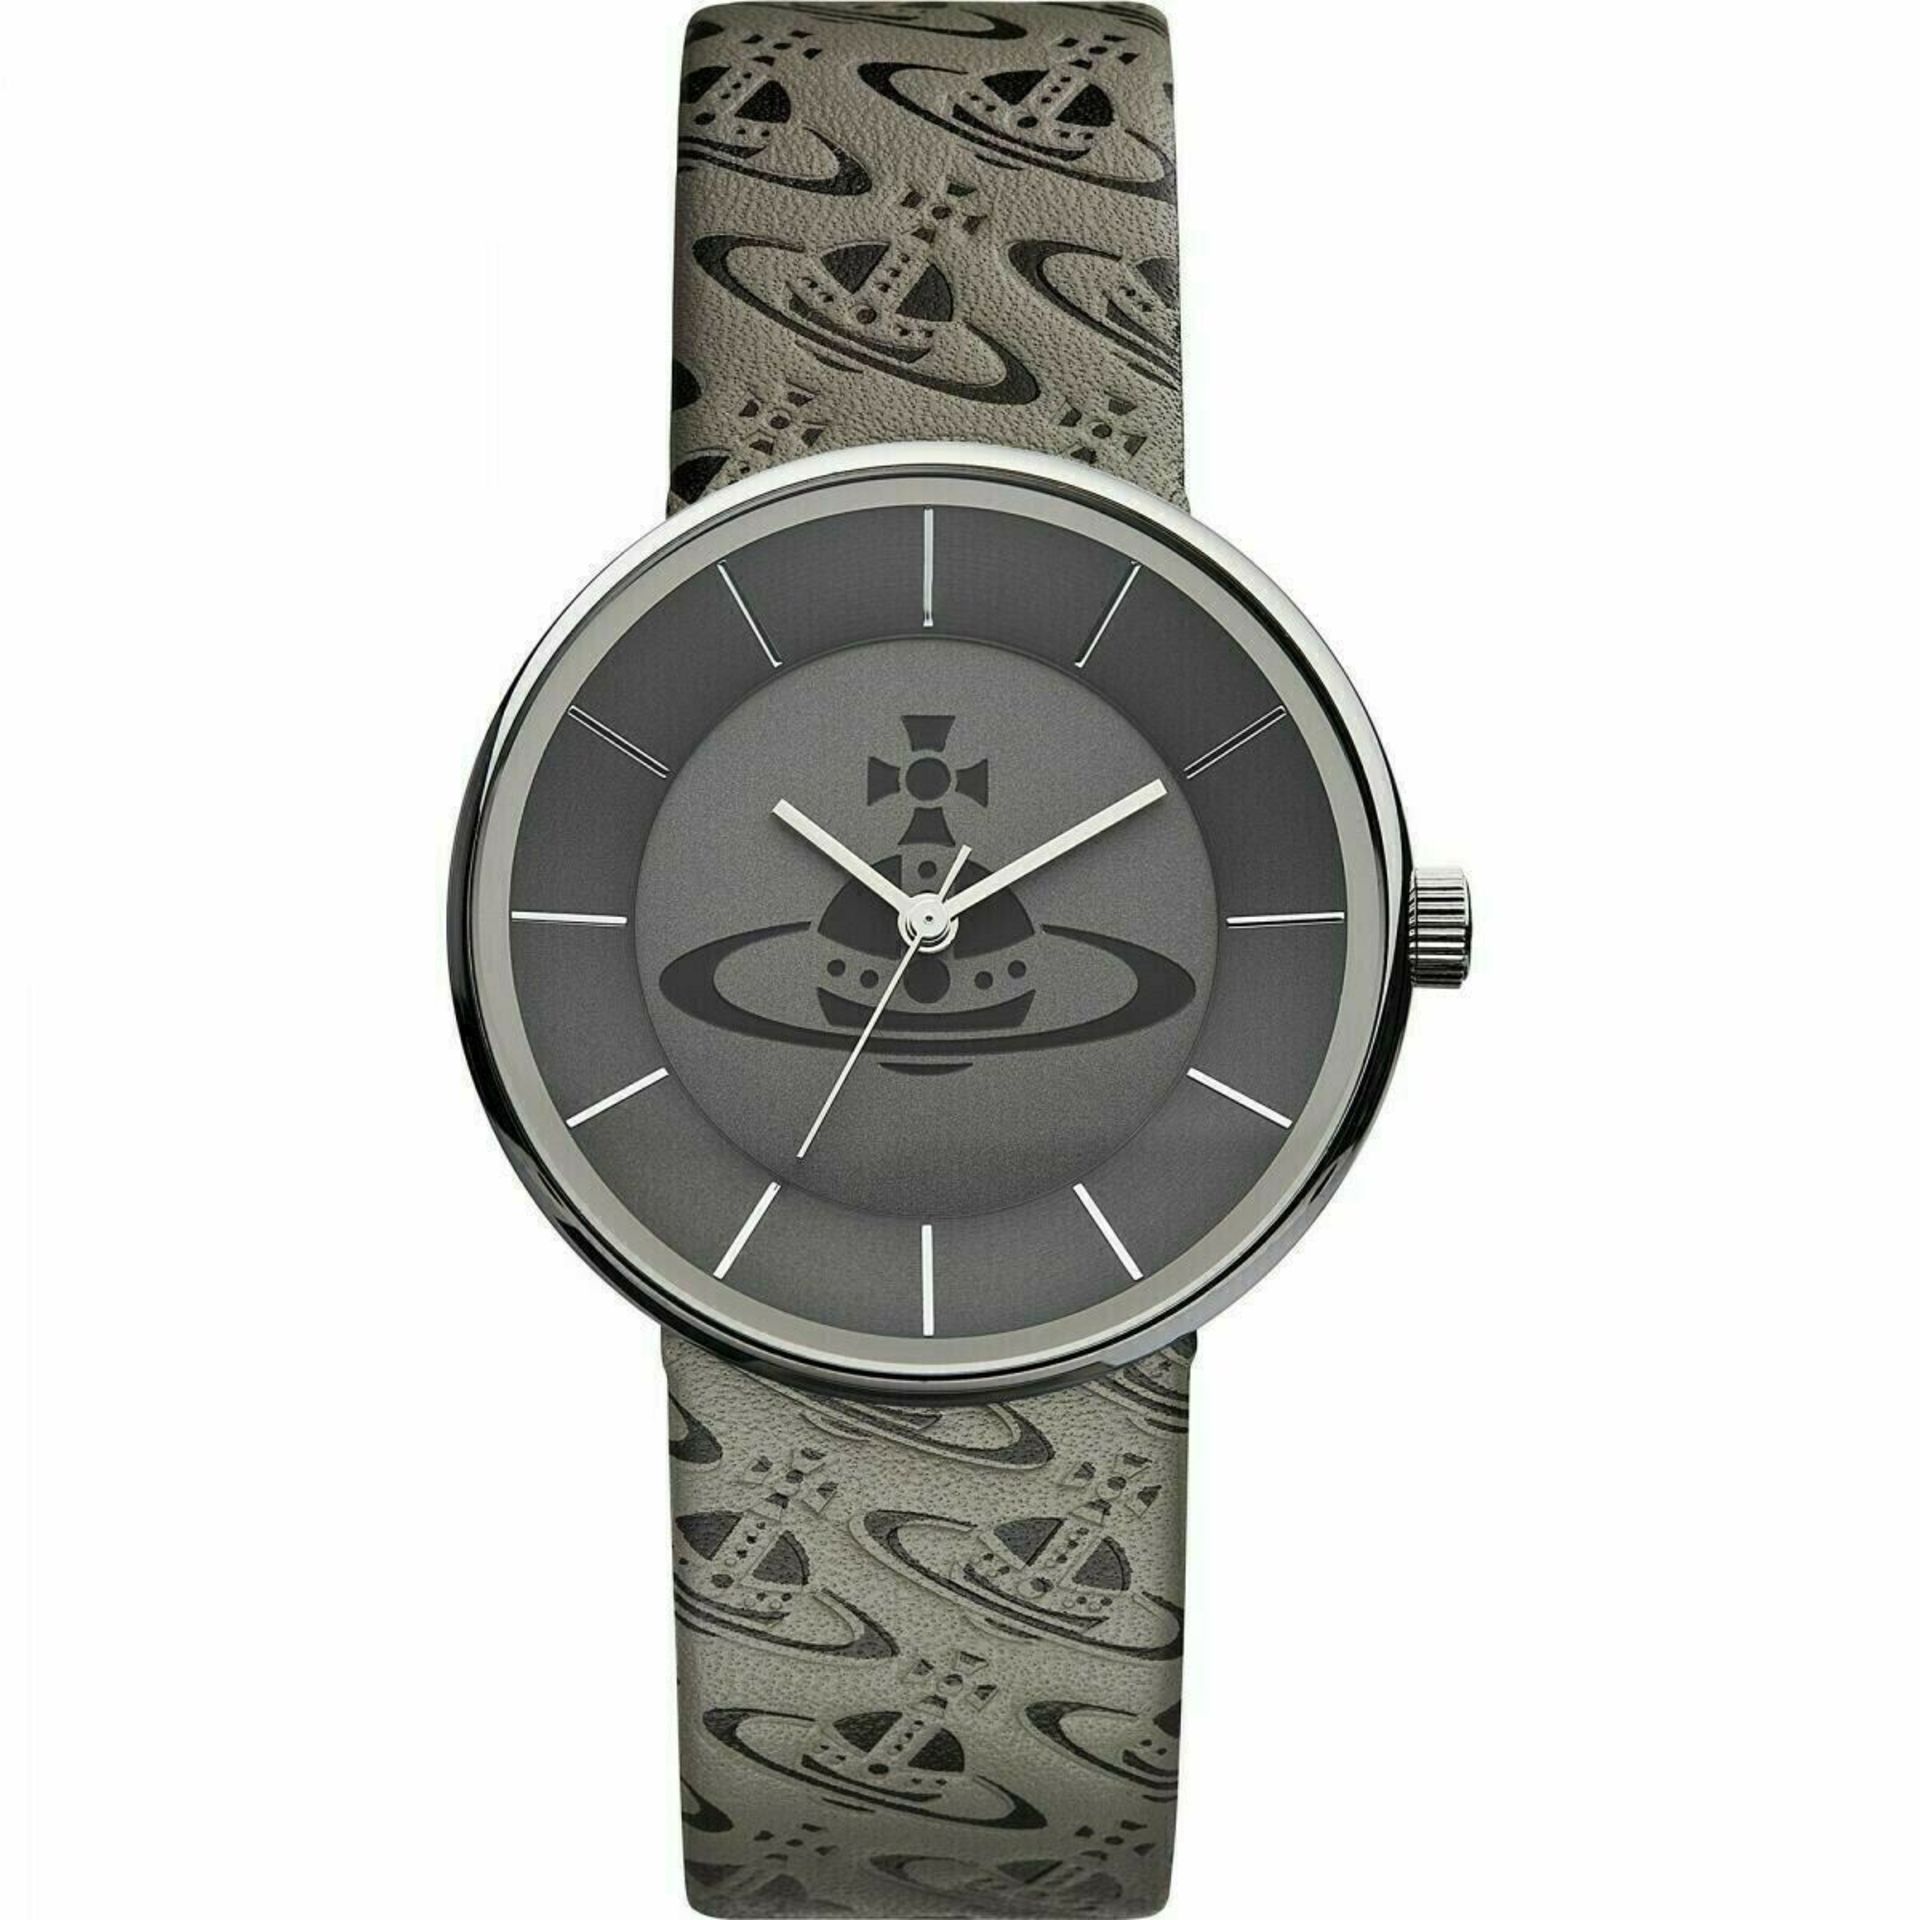 A Vivienne Westwood Spirit wristwatch, new with tag,